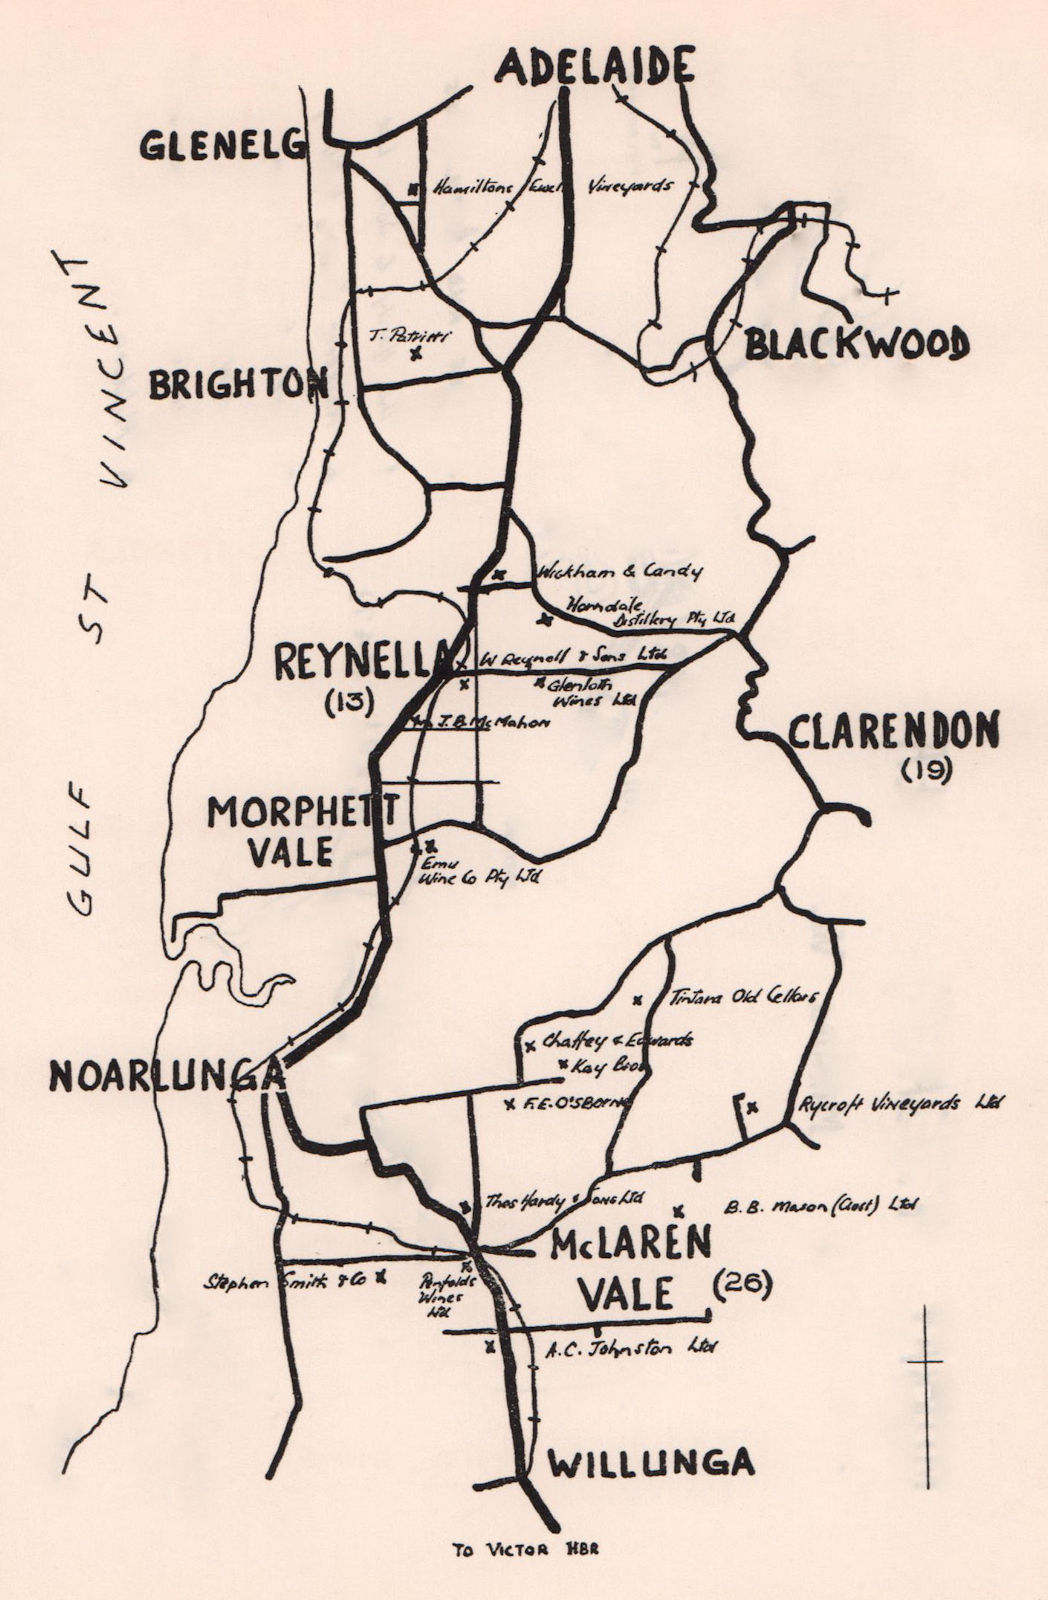 McLaren Vale wine region sketch map. South Australia wineries. Adelaide 1955